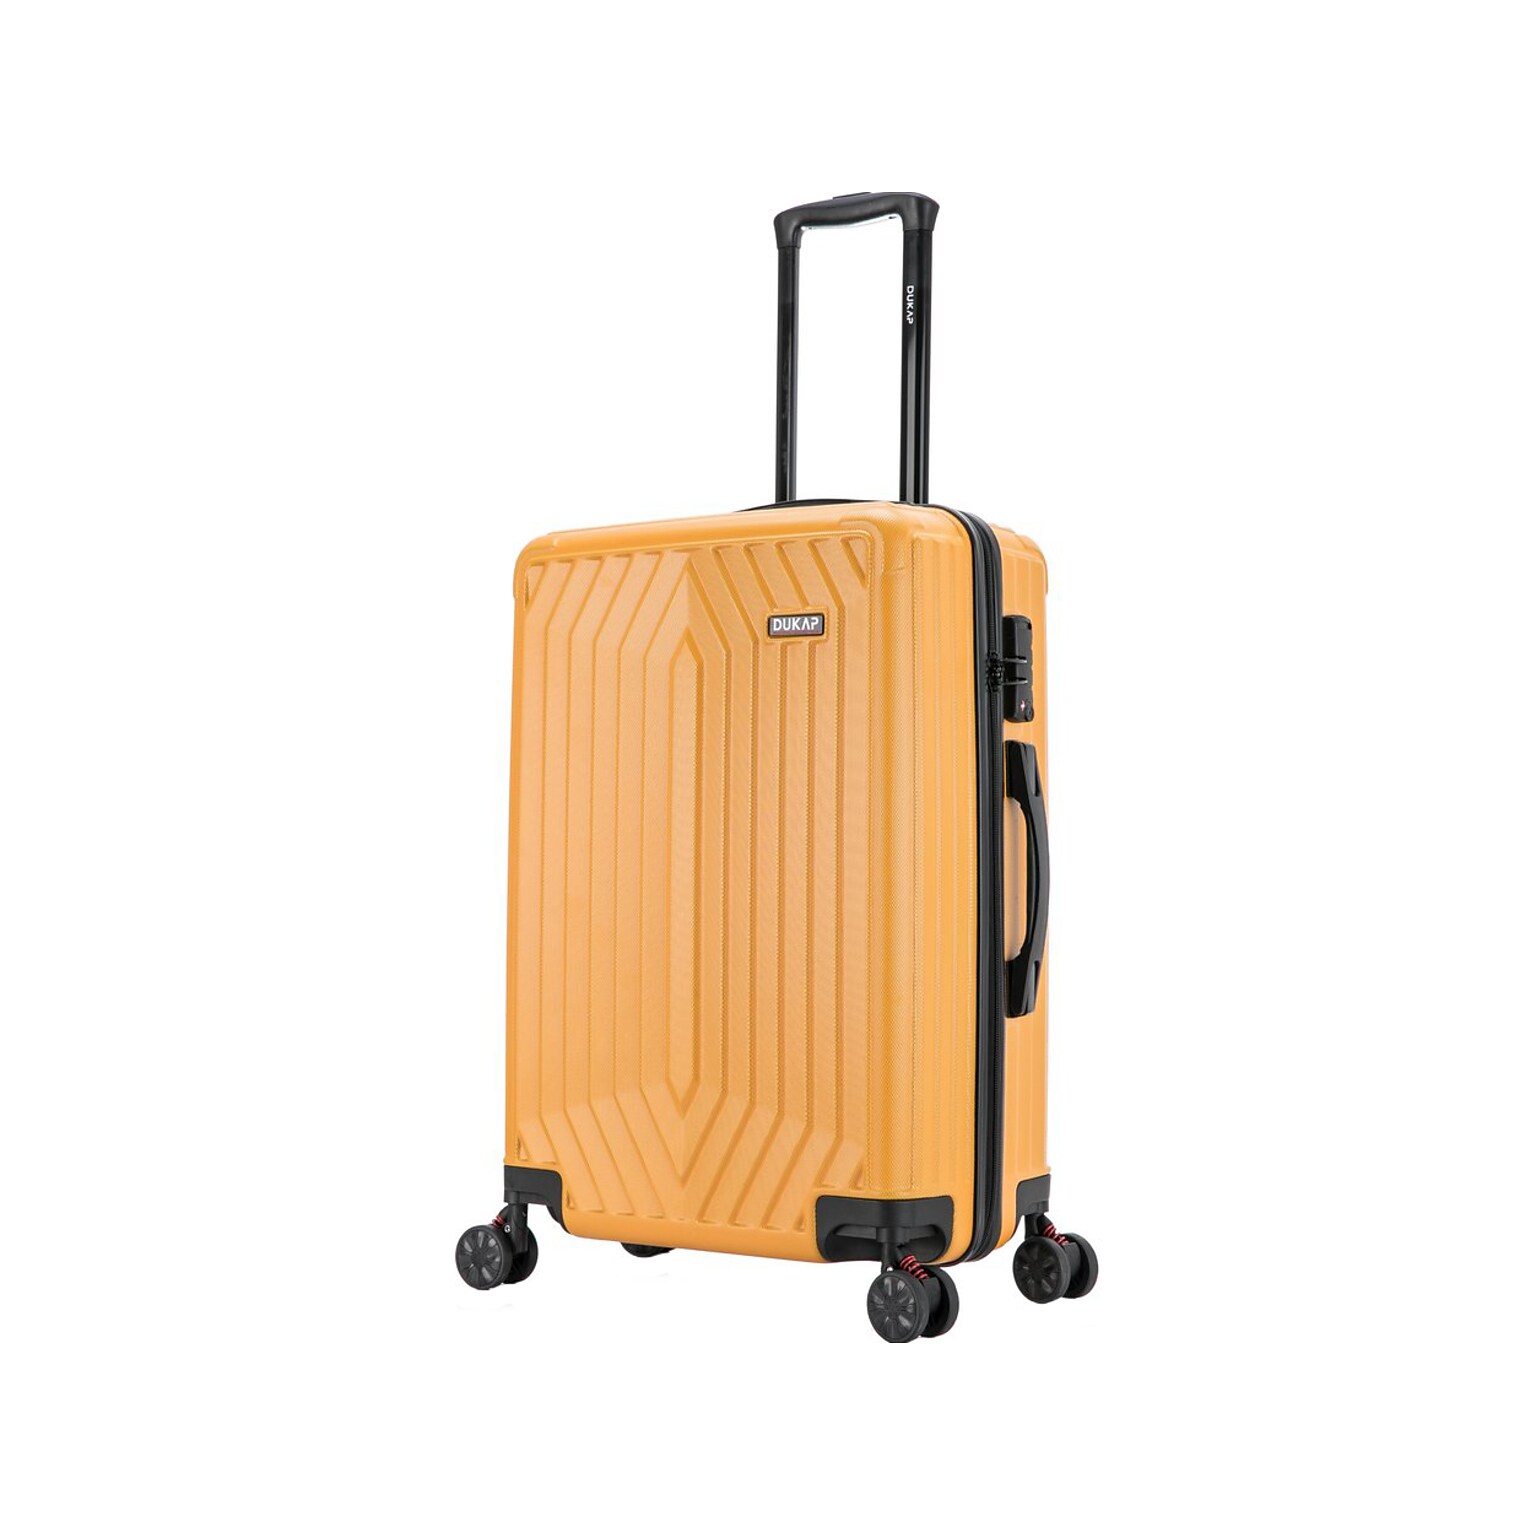 DUKAP Stratos 25.59 Hardside Suitcase, 4-Wheeled Spinner, TSA Checkpoint Friendly, Terracota (DKSTR00M-TER)